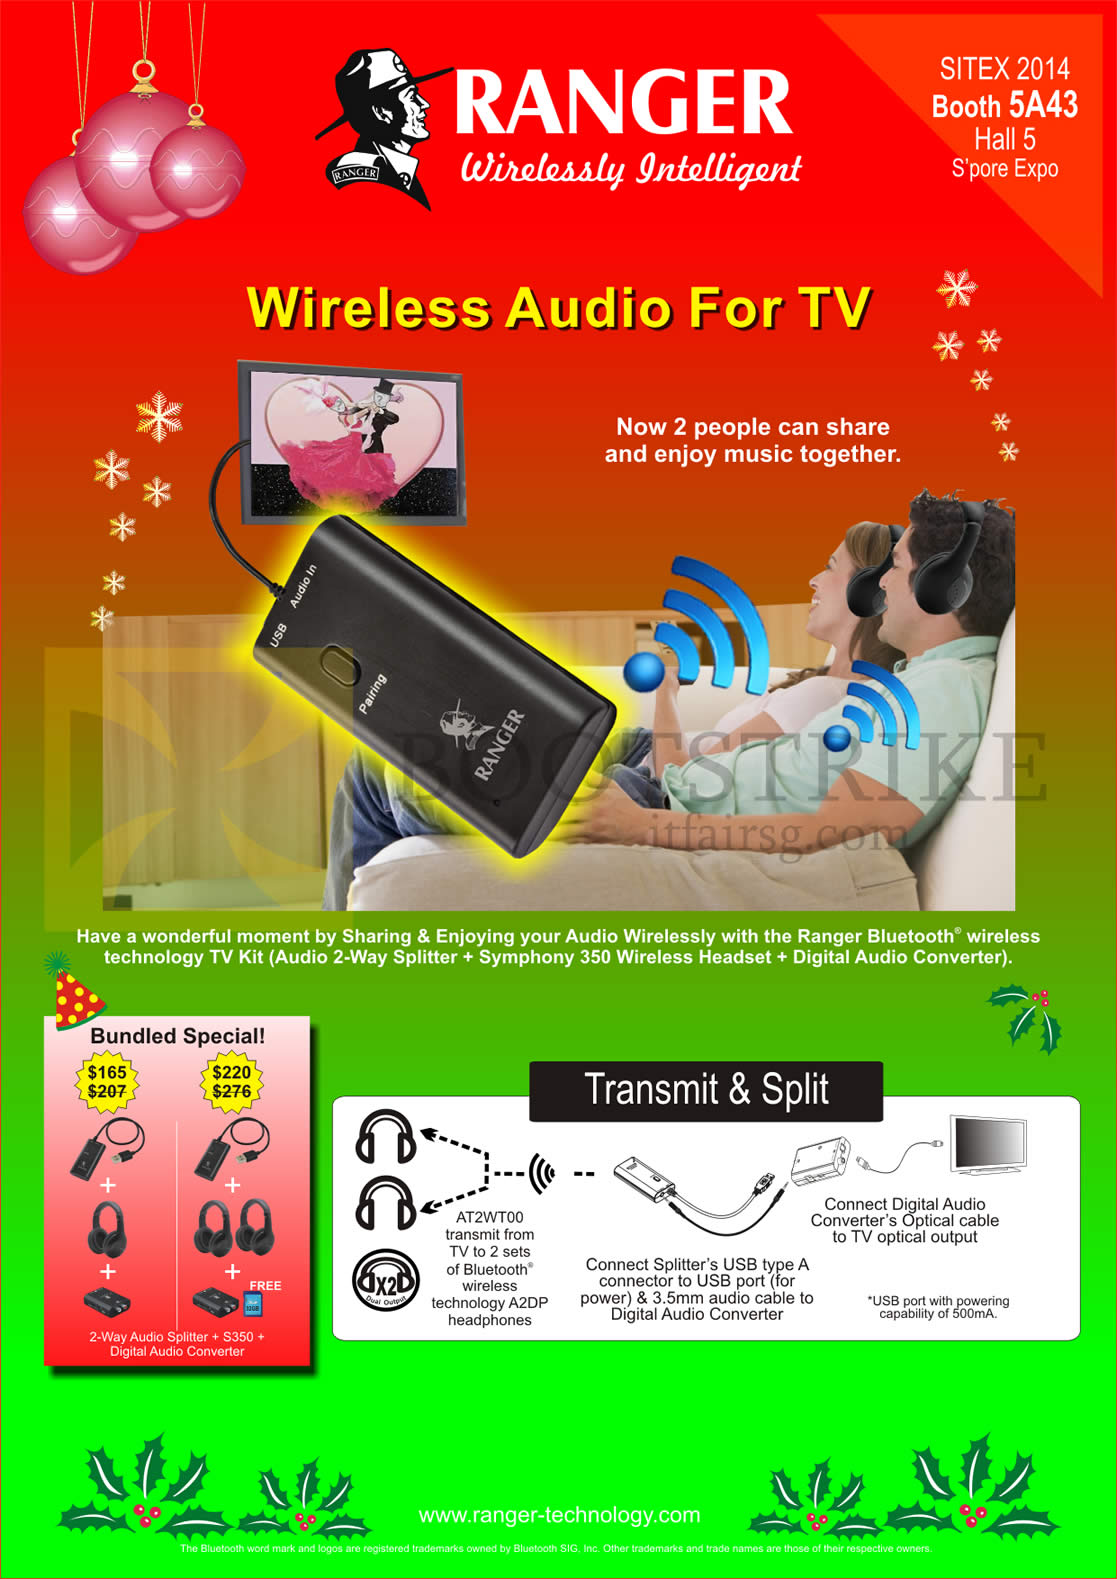 SITEX 2014 price list image brochure of Ranger Wireless Audio For TV